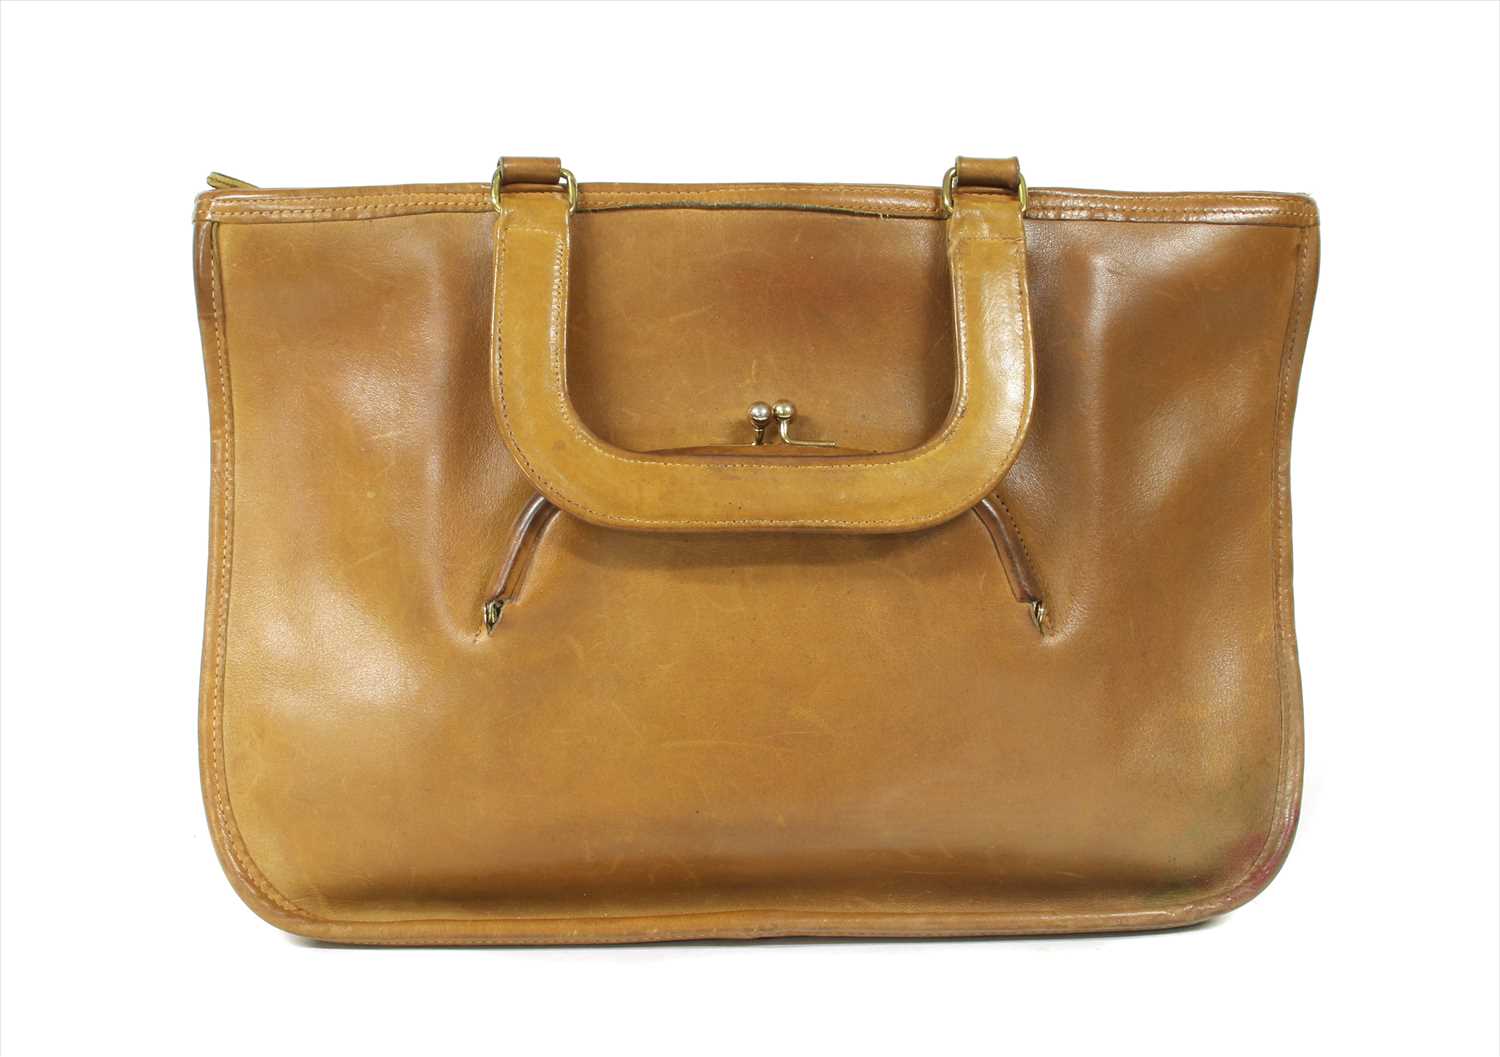 Lot 1020 - A Coach tan leather tote bag